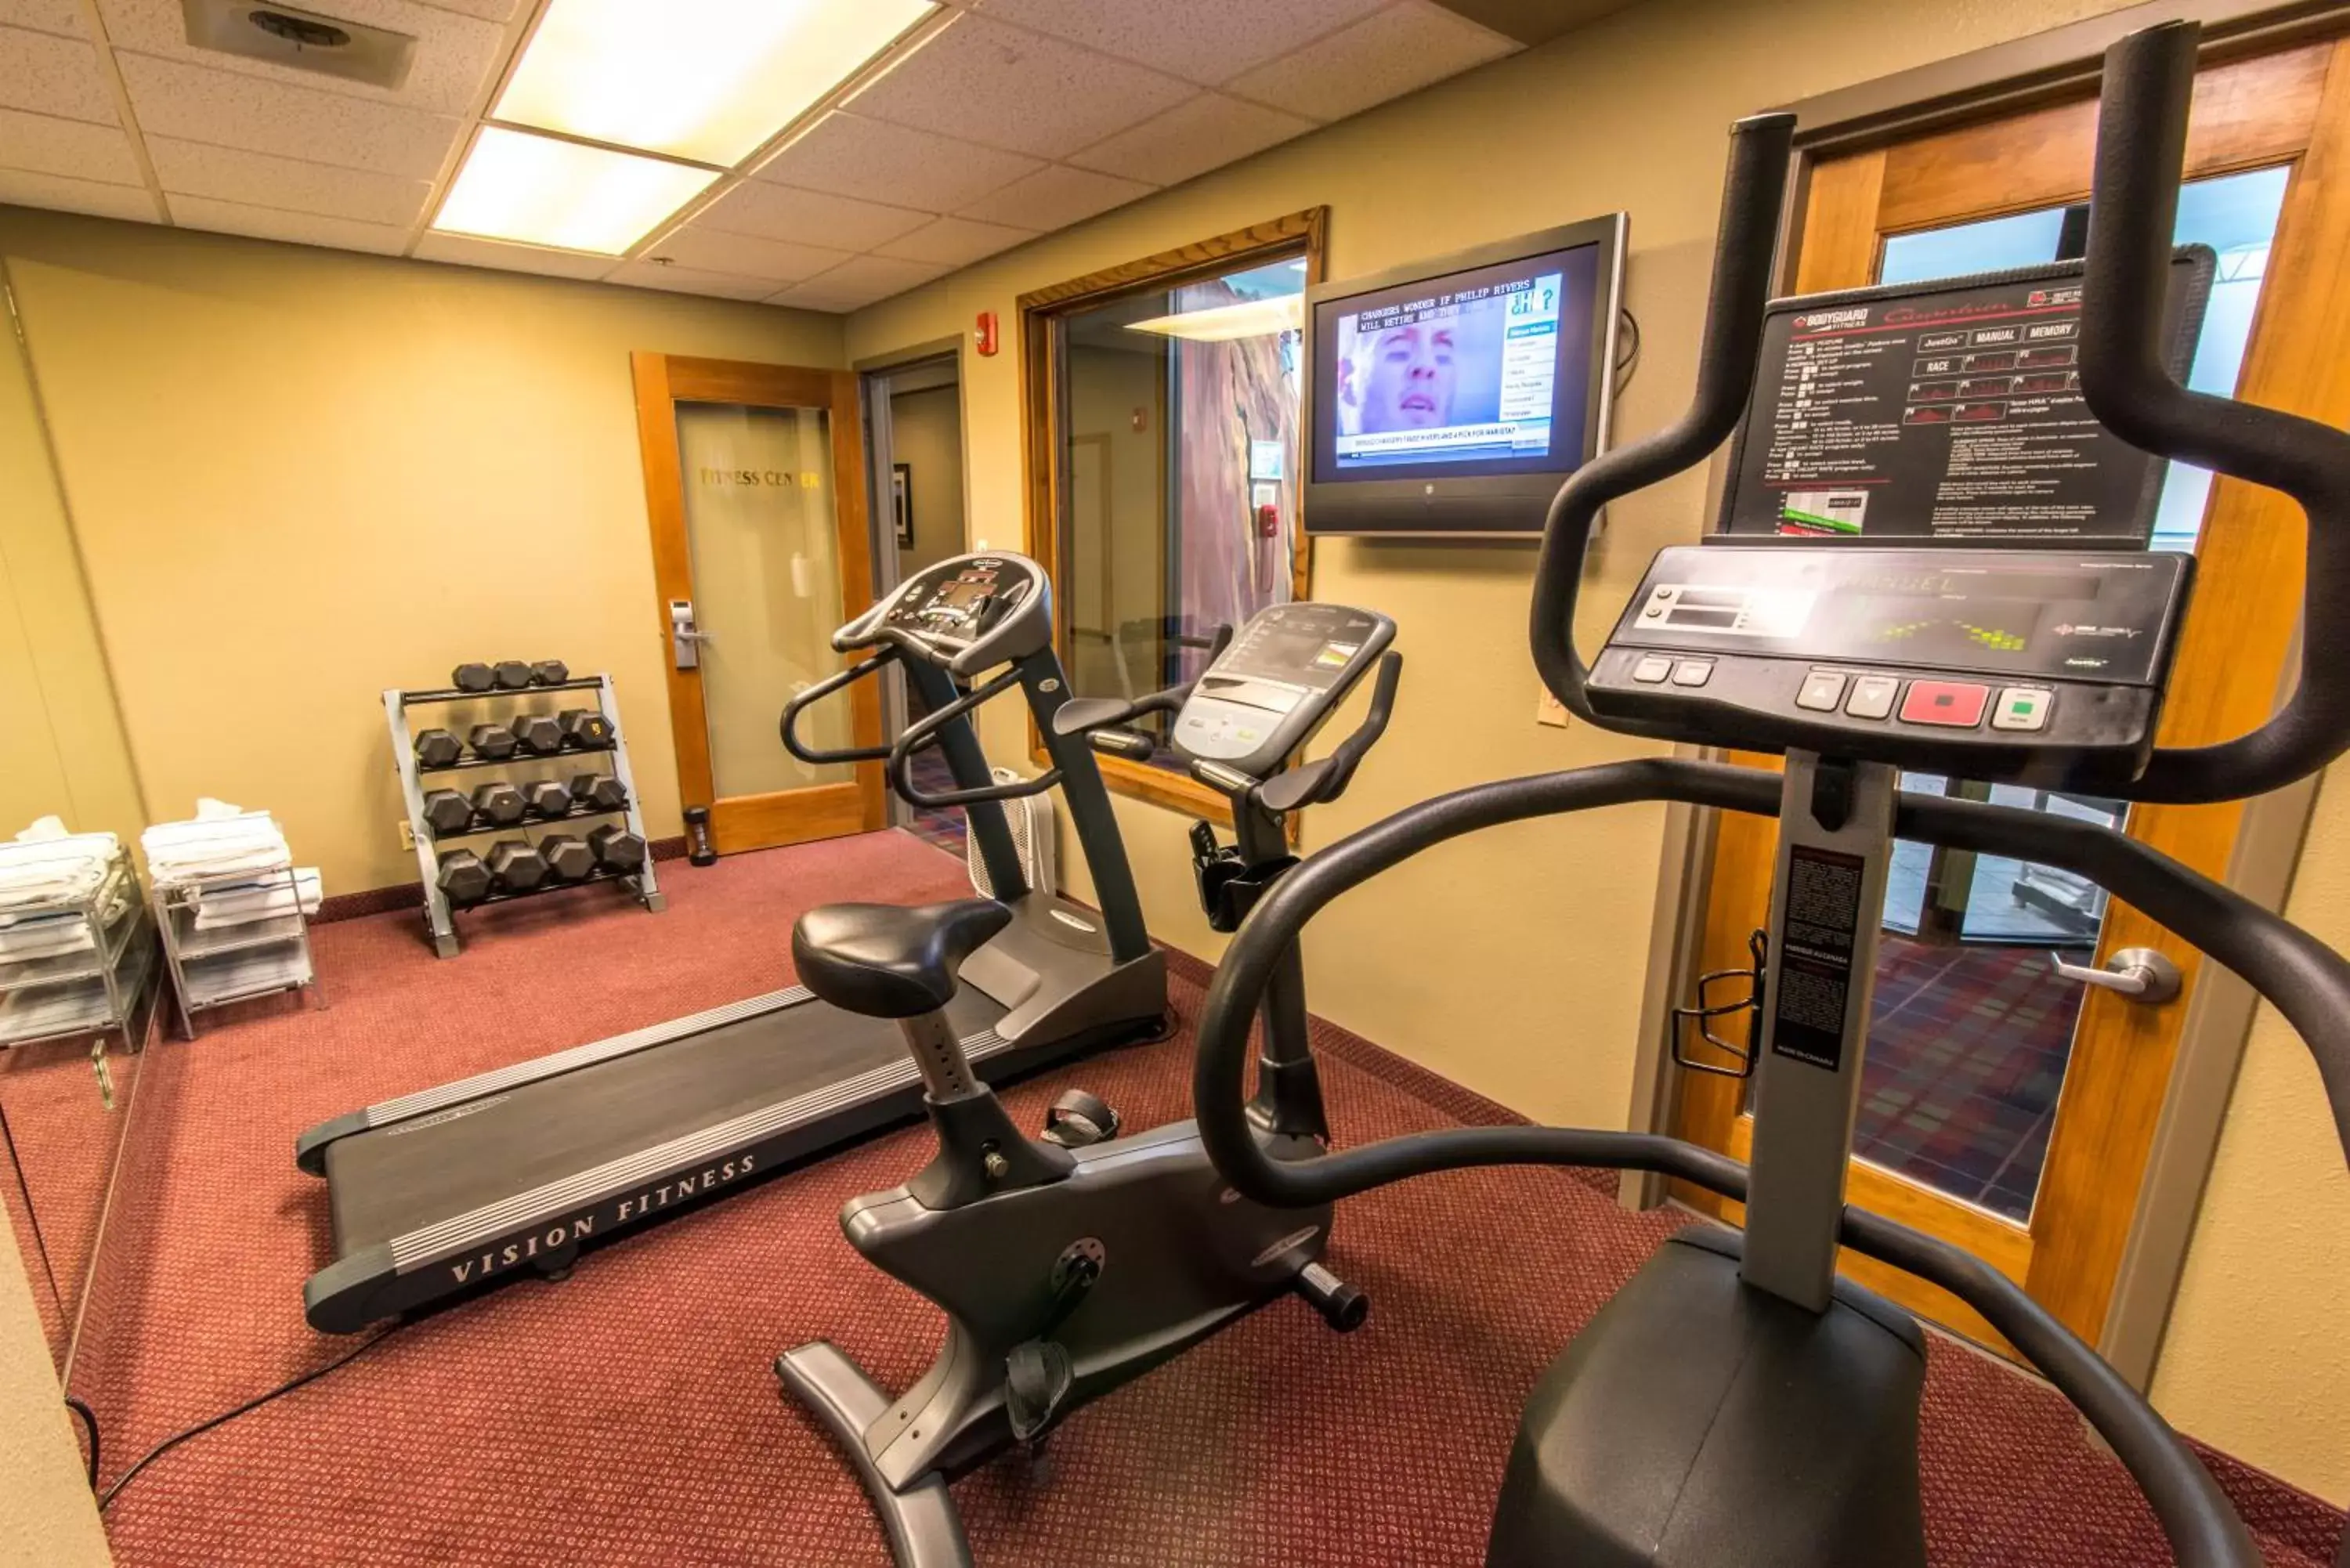 Fitness centre/facilities, Fitness Center/Facilities in Grand Vista Hotel Grand Junction